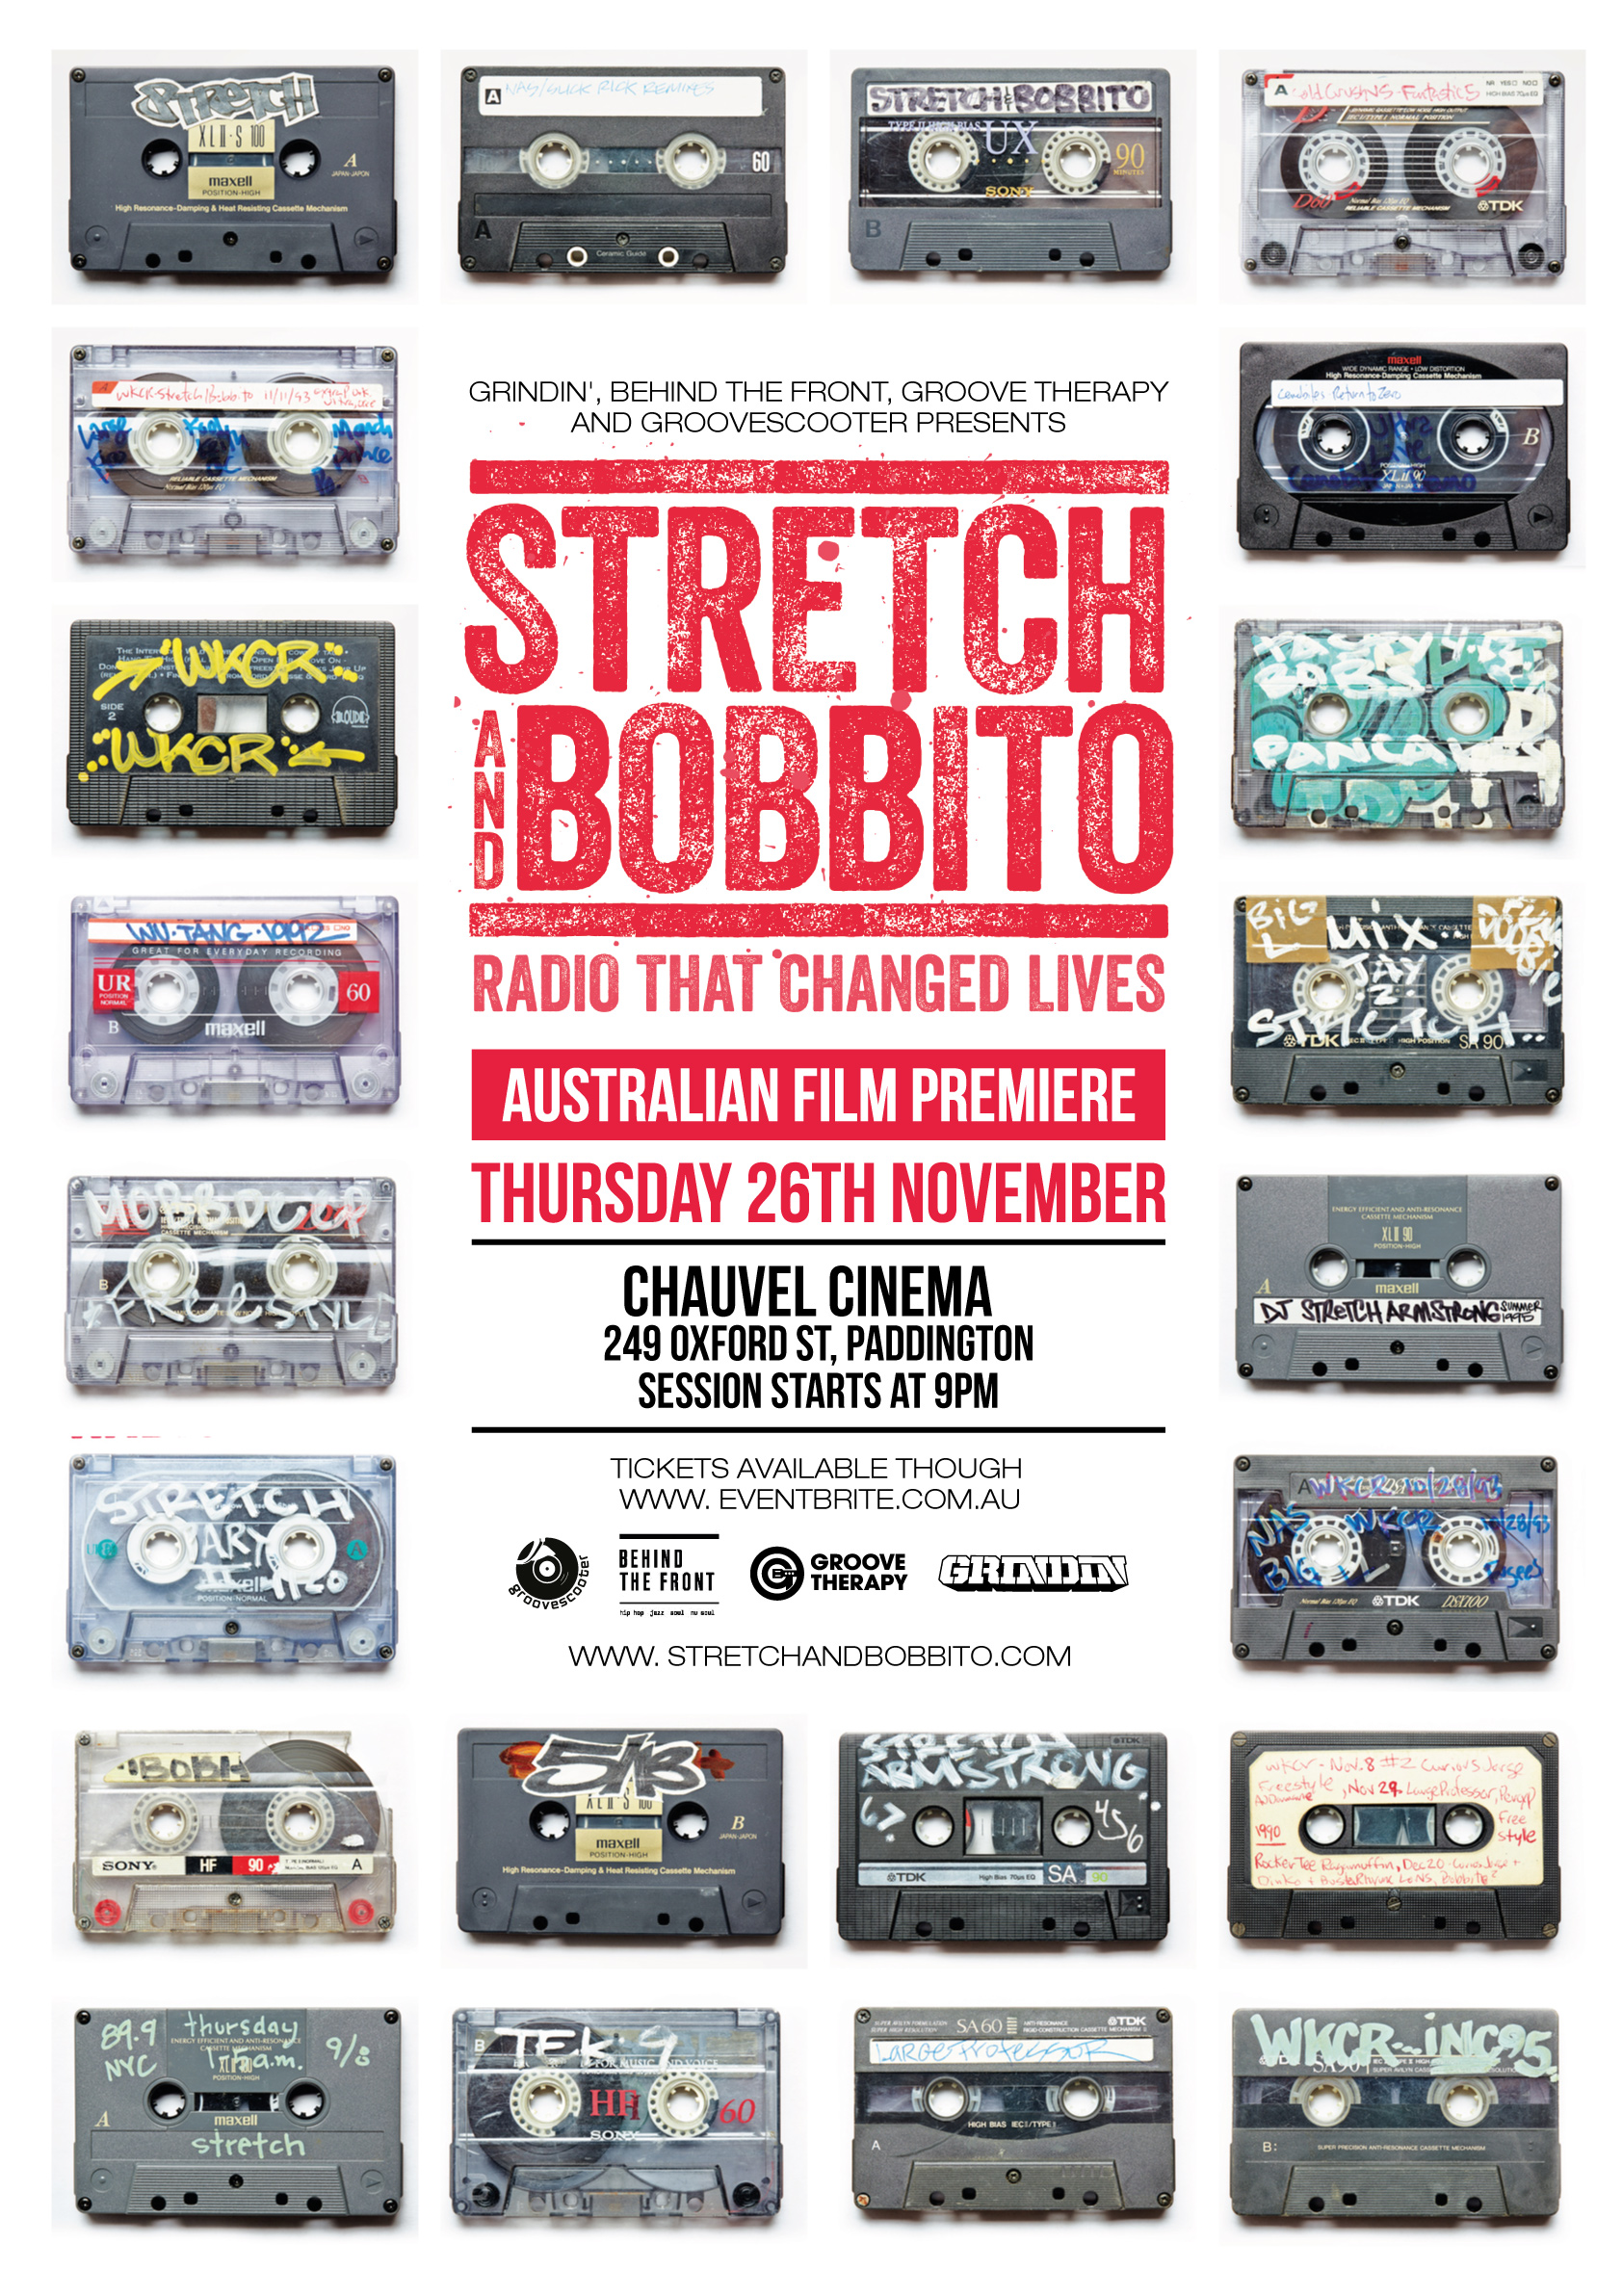 STRETCH AND BOBBITO “RADIO THAT CHANGED LIVES” AUSTRALIAN FILM PREMIERE